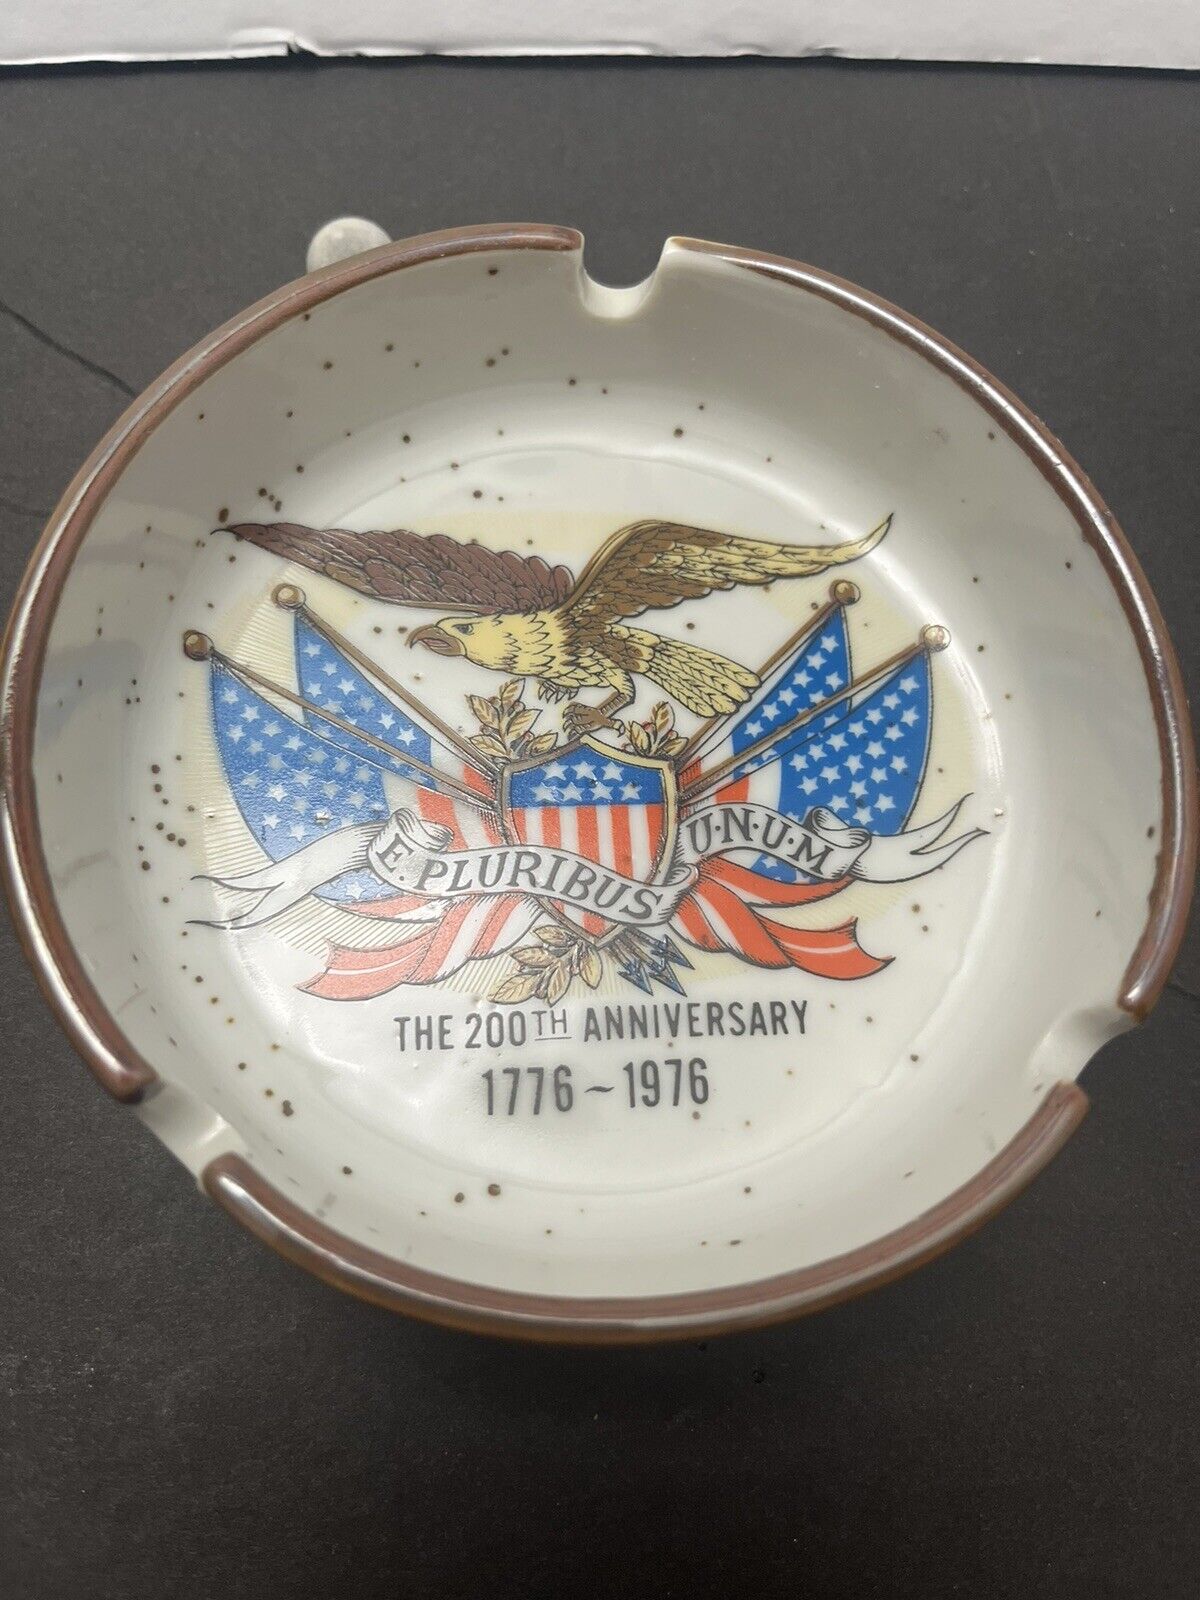  America\'s Bicentennial Ceramic Ashtray E. Pluribus Unum 200th Anniversary USA  